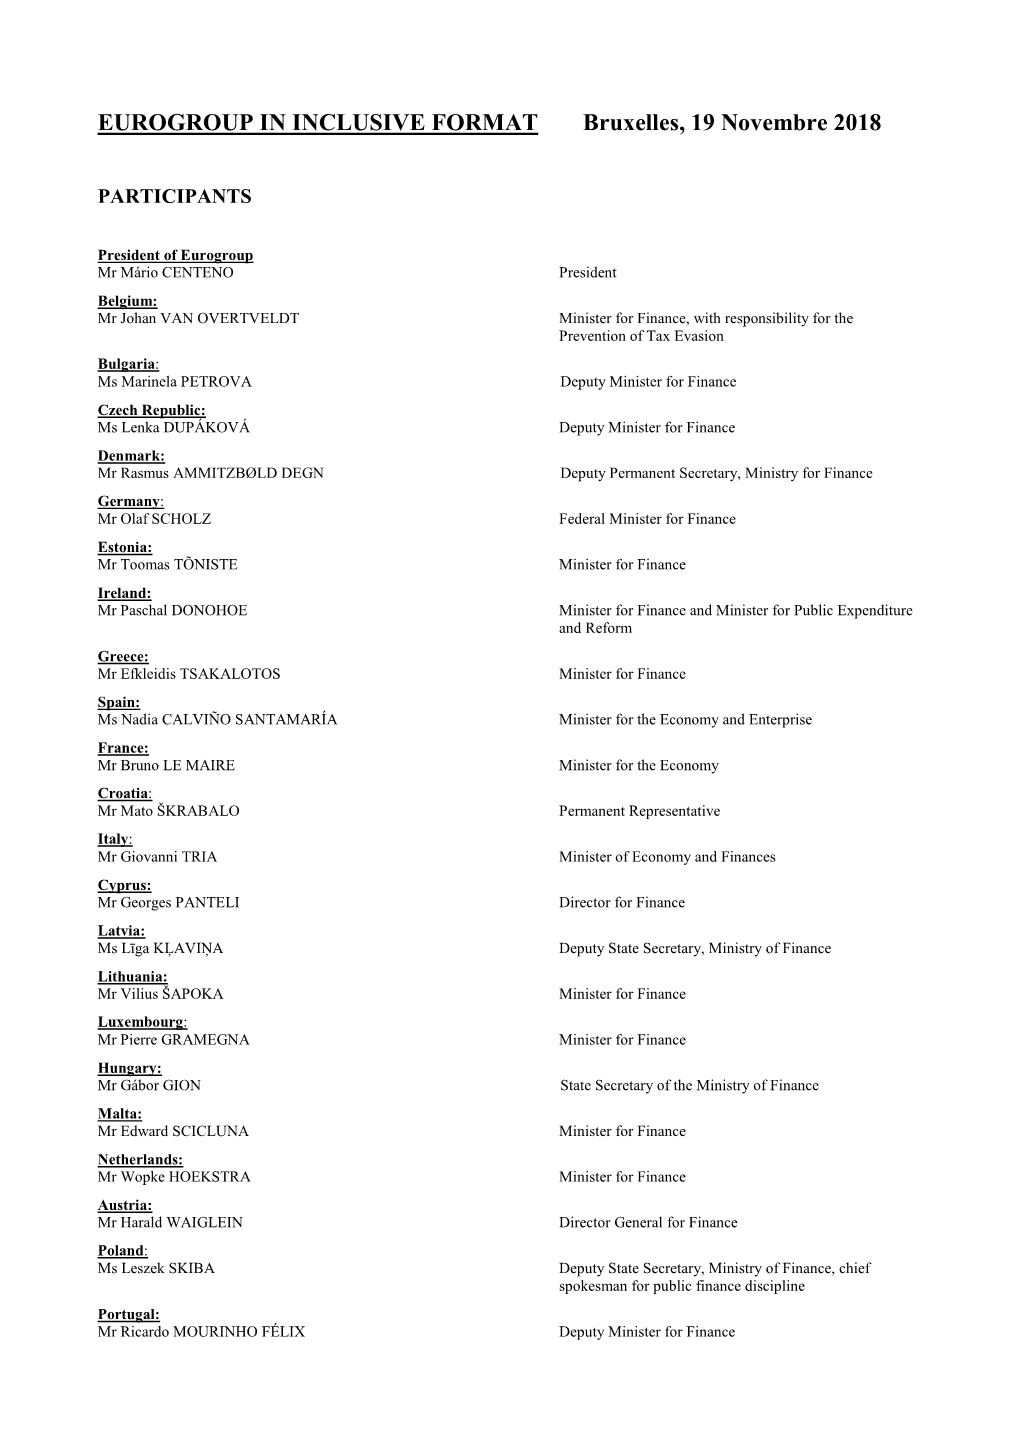 Eurogroup Inclusive Format List of Participants